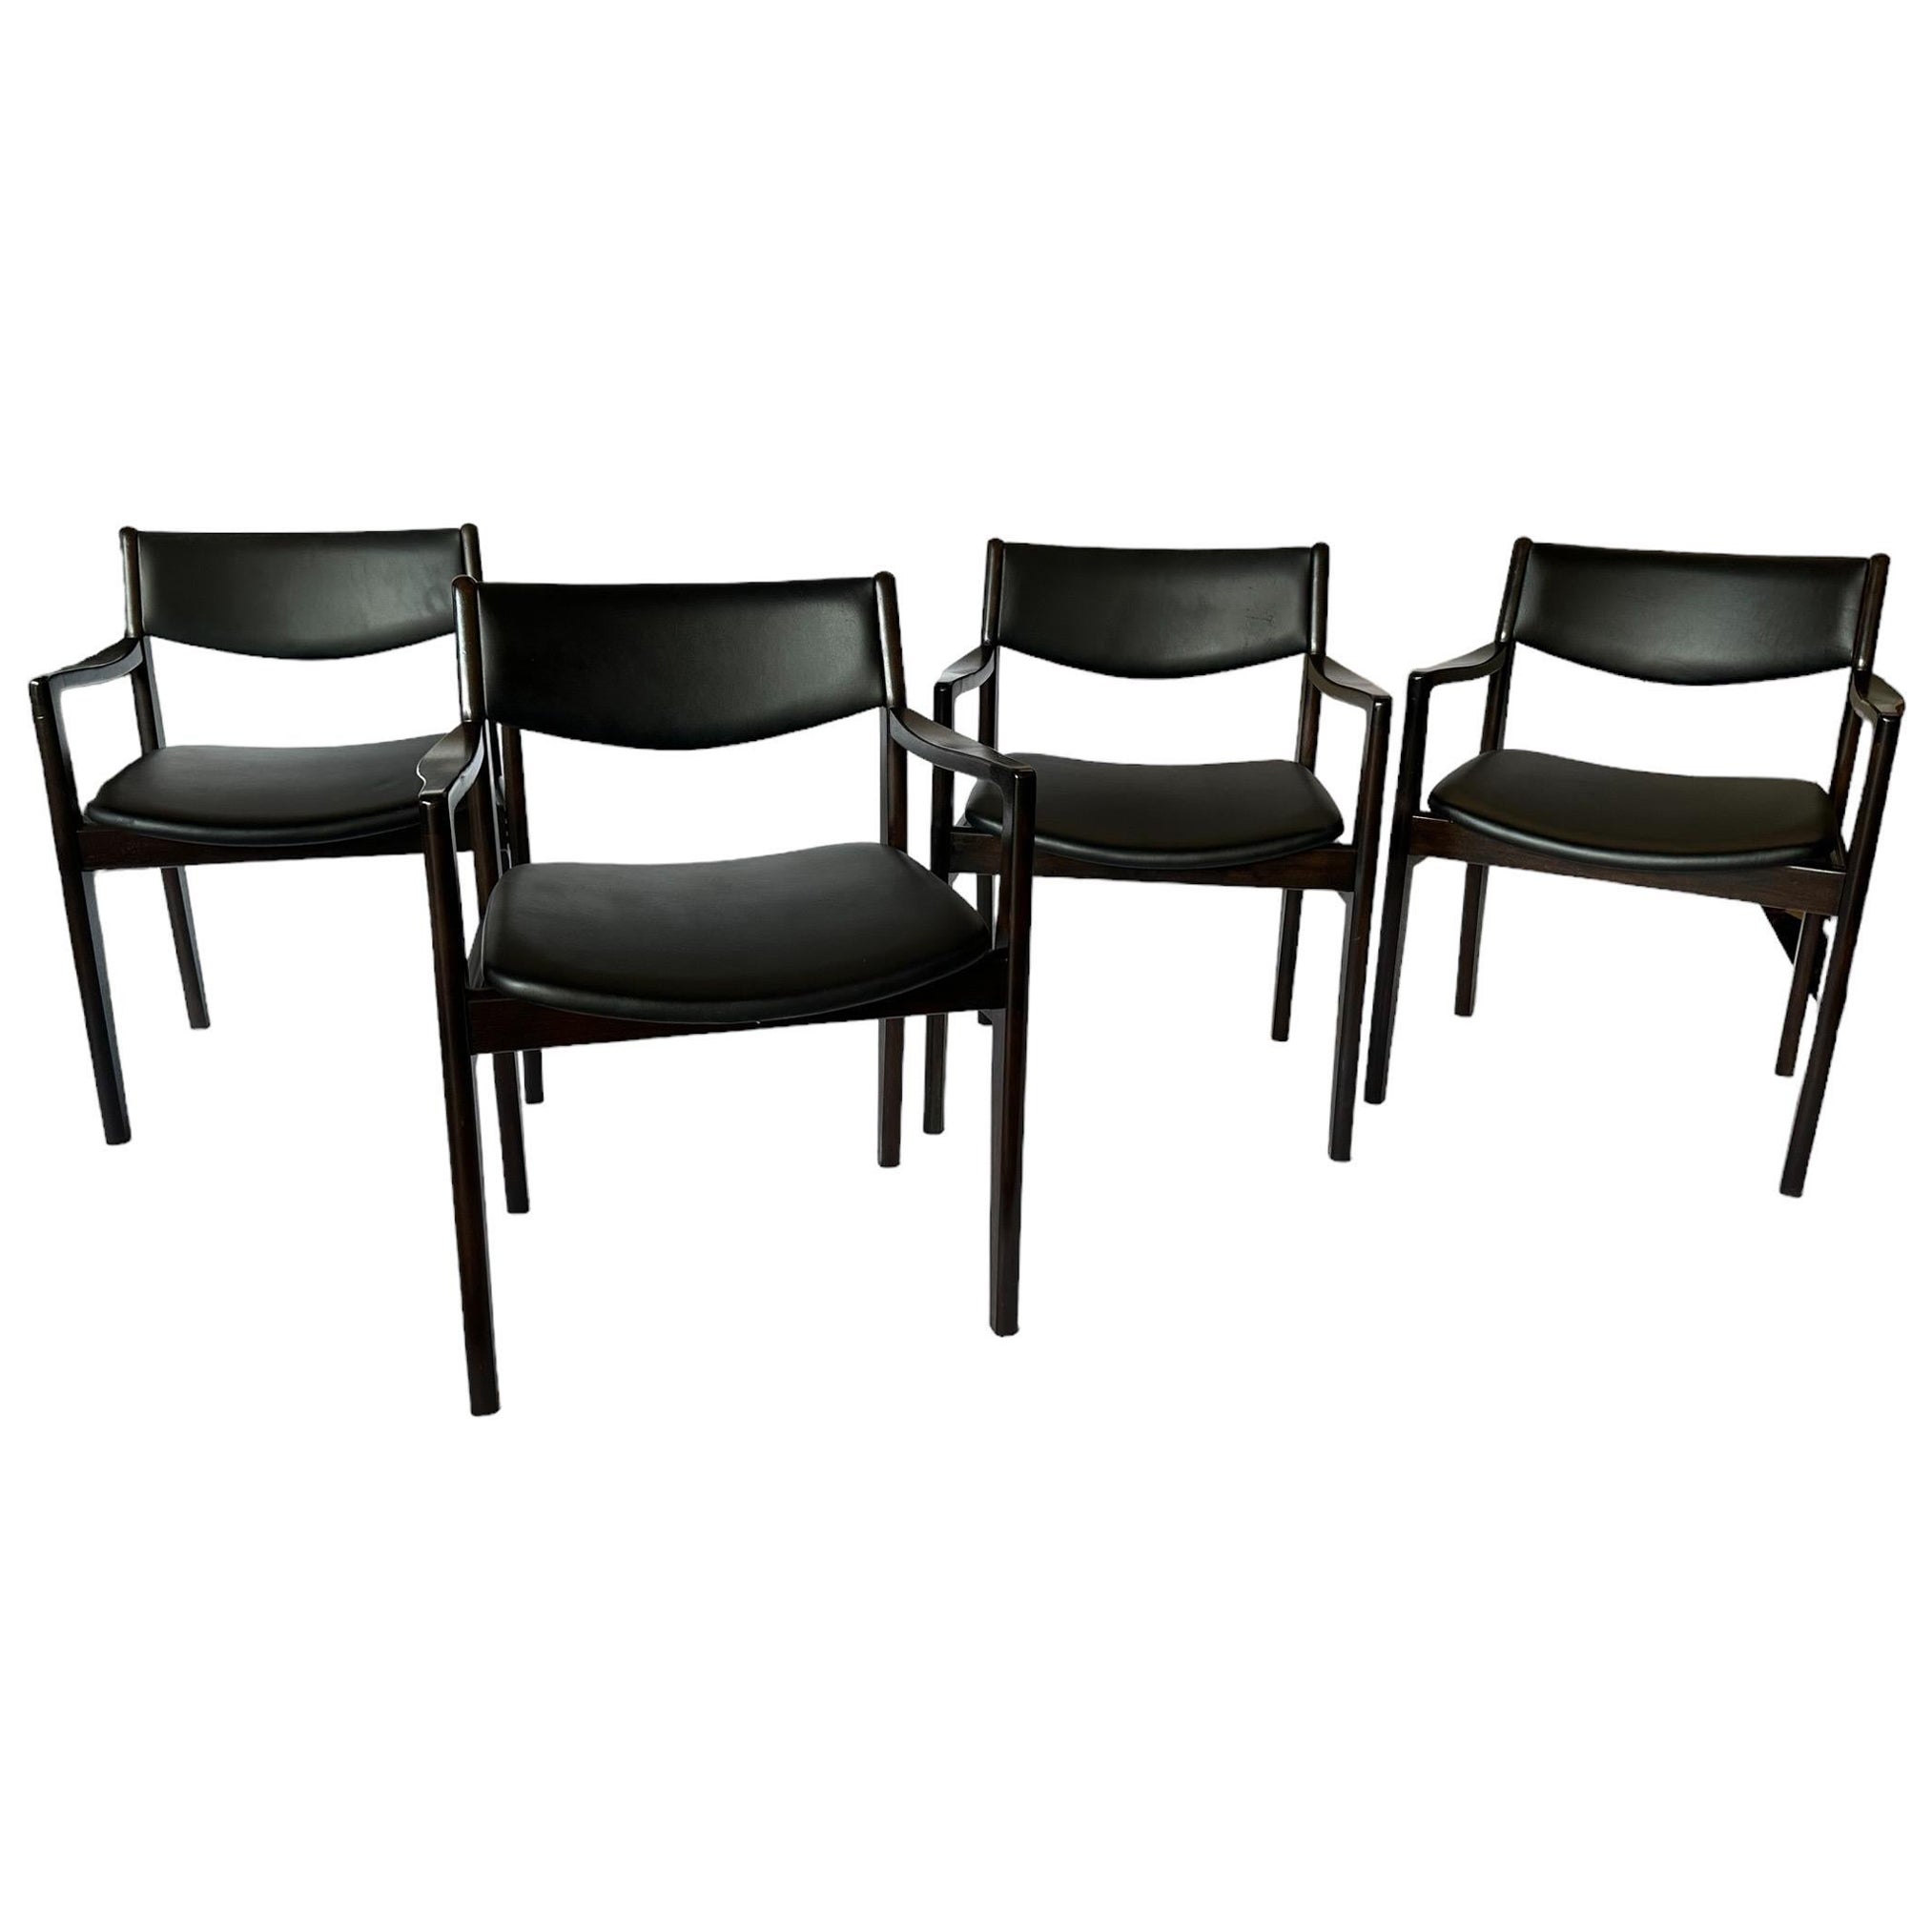 Set of 4 Midcentury Modern Danish Style Hardwood Dining Chairs